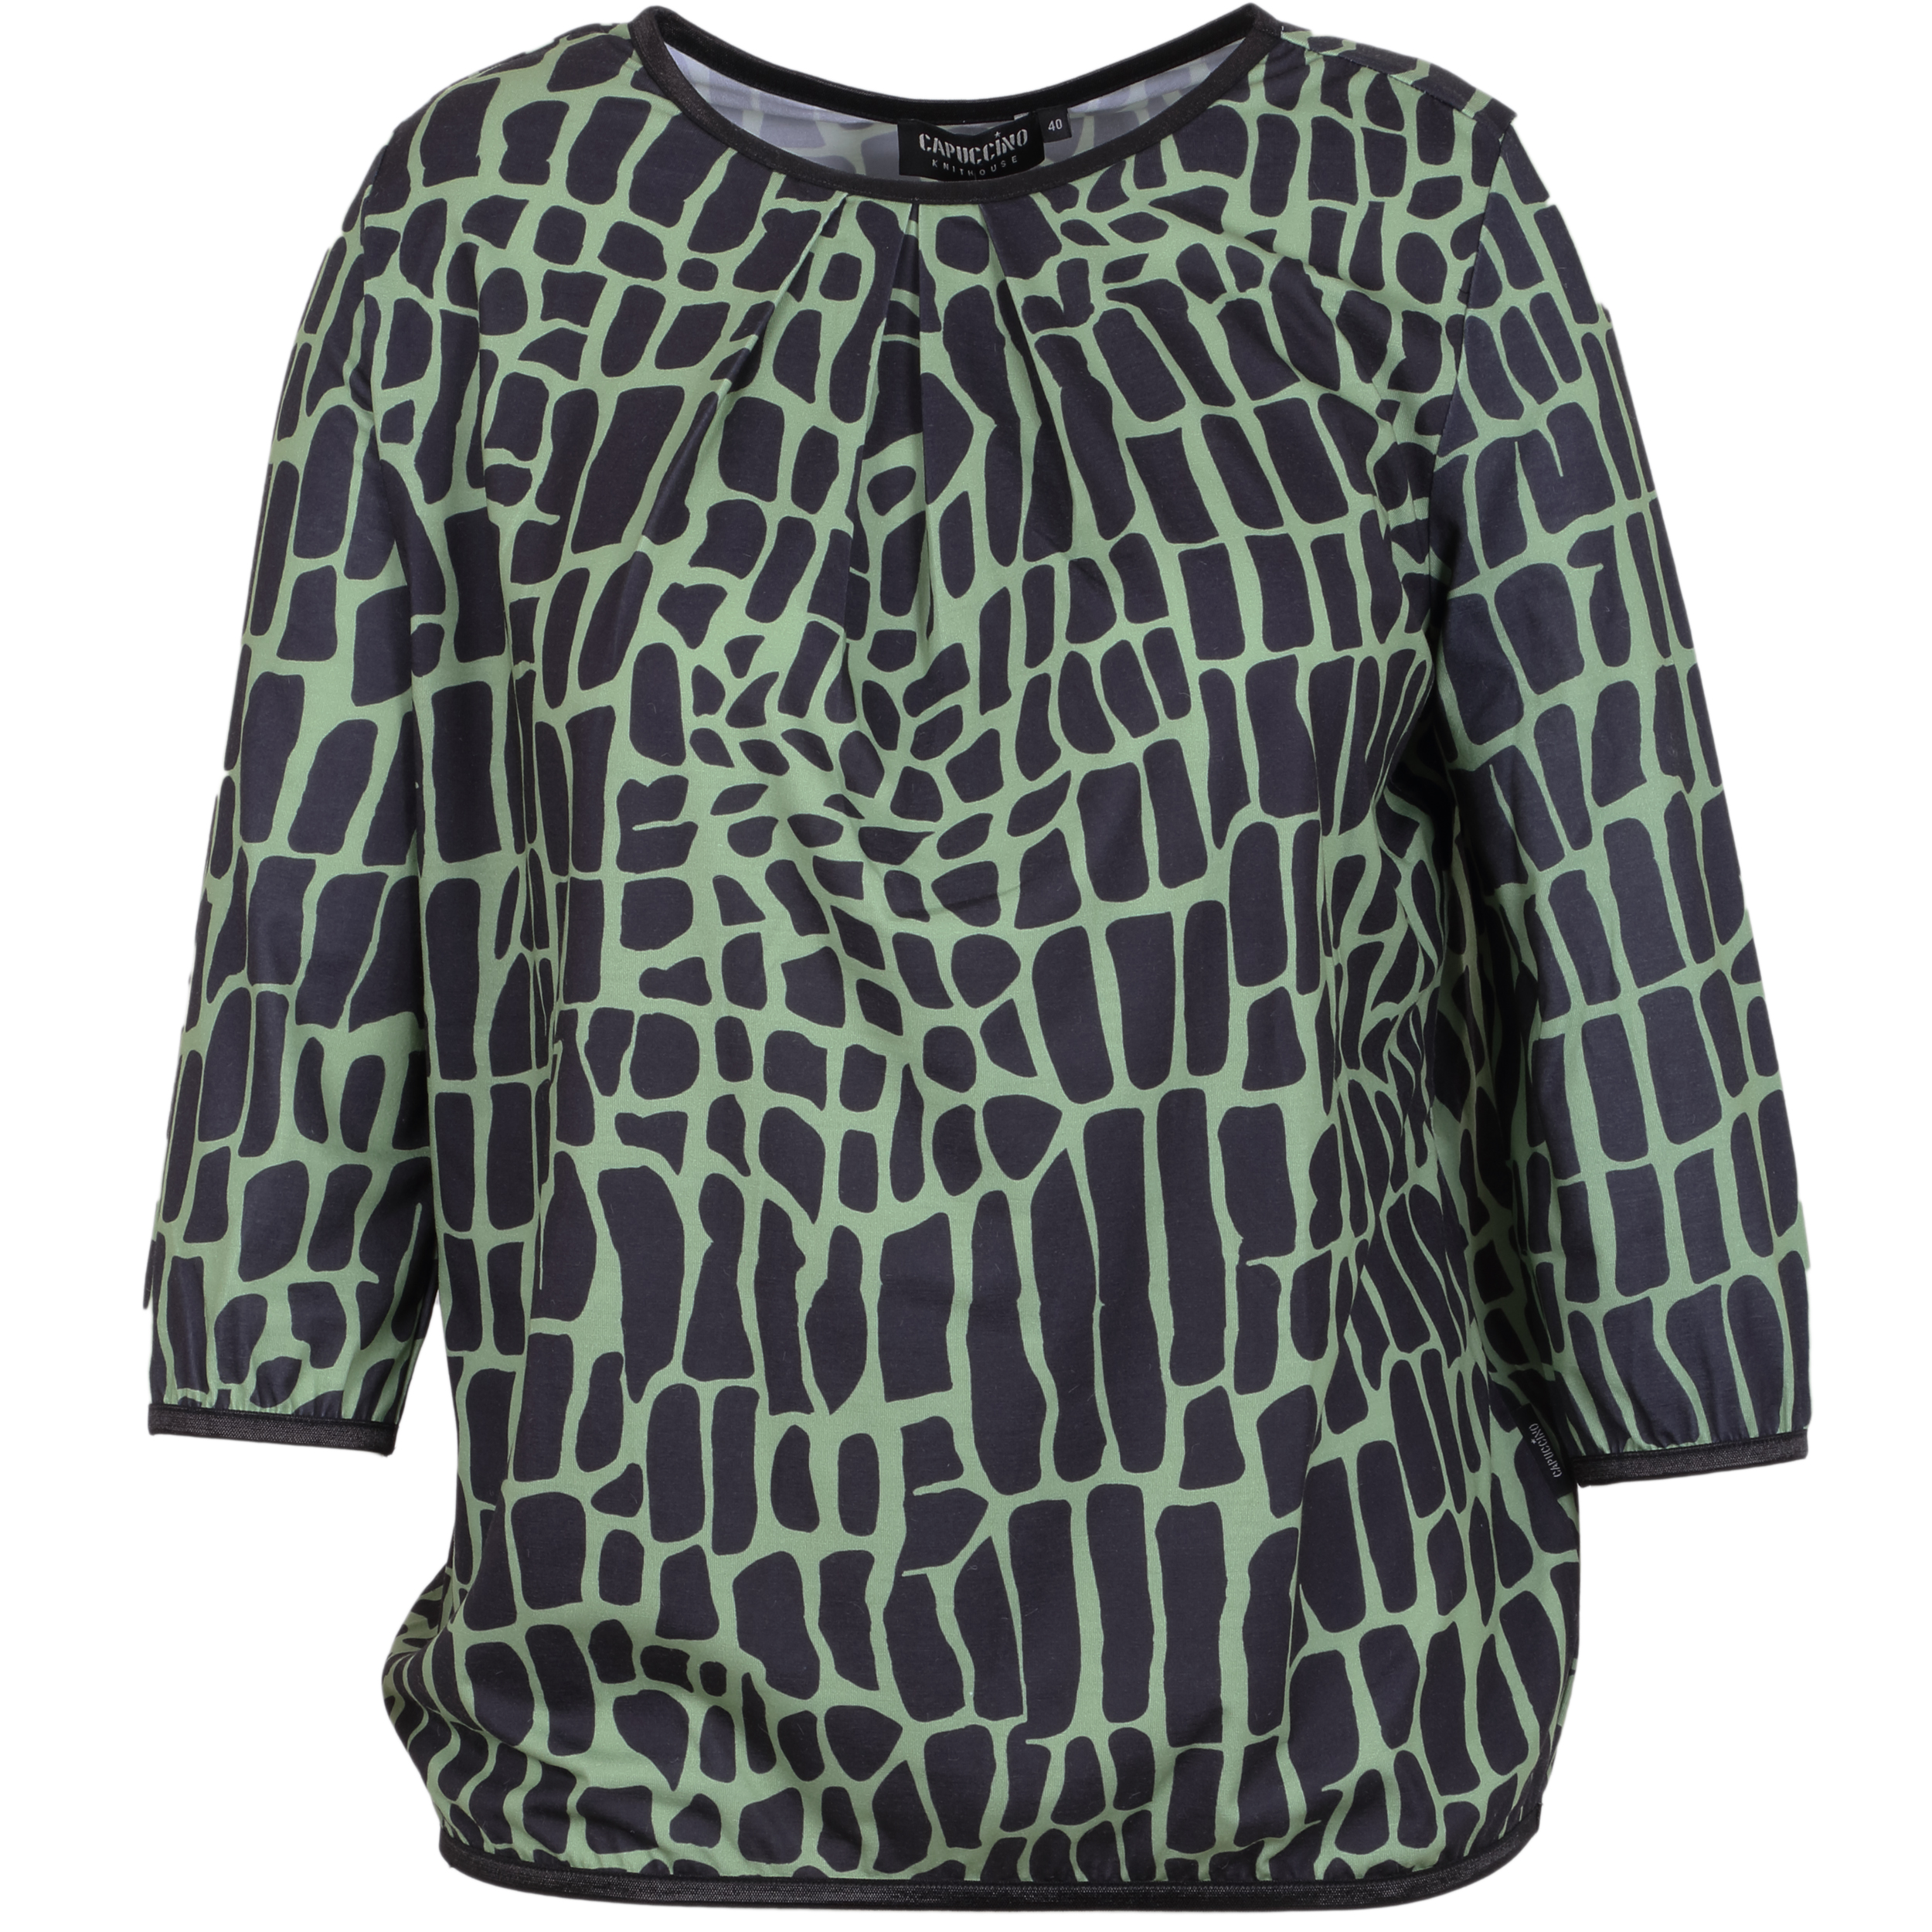 Capuccino Damen Shirt 3/4 Arm - grün